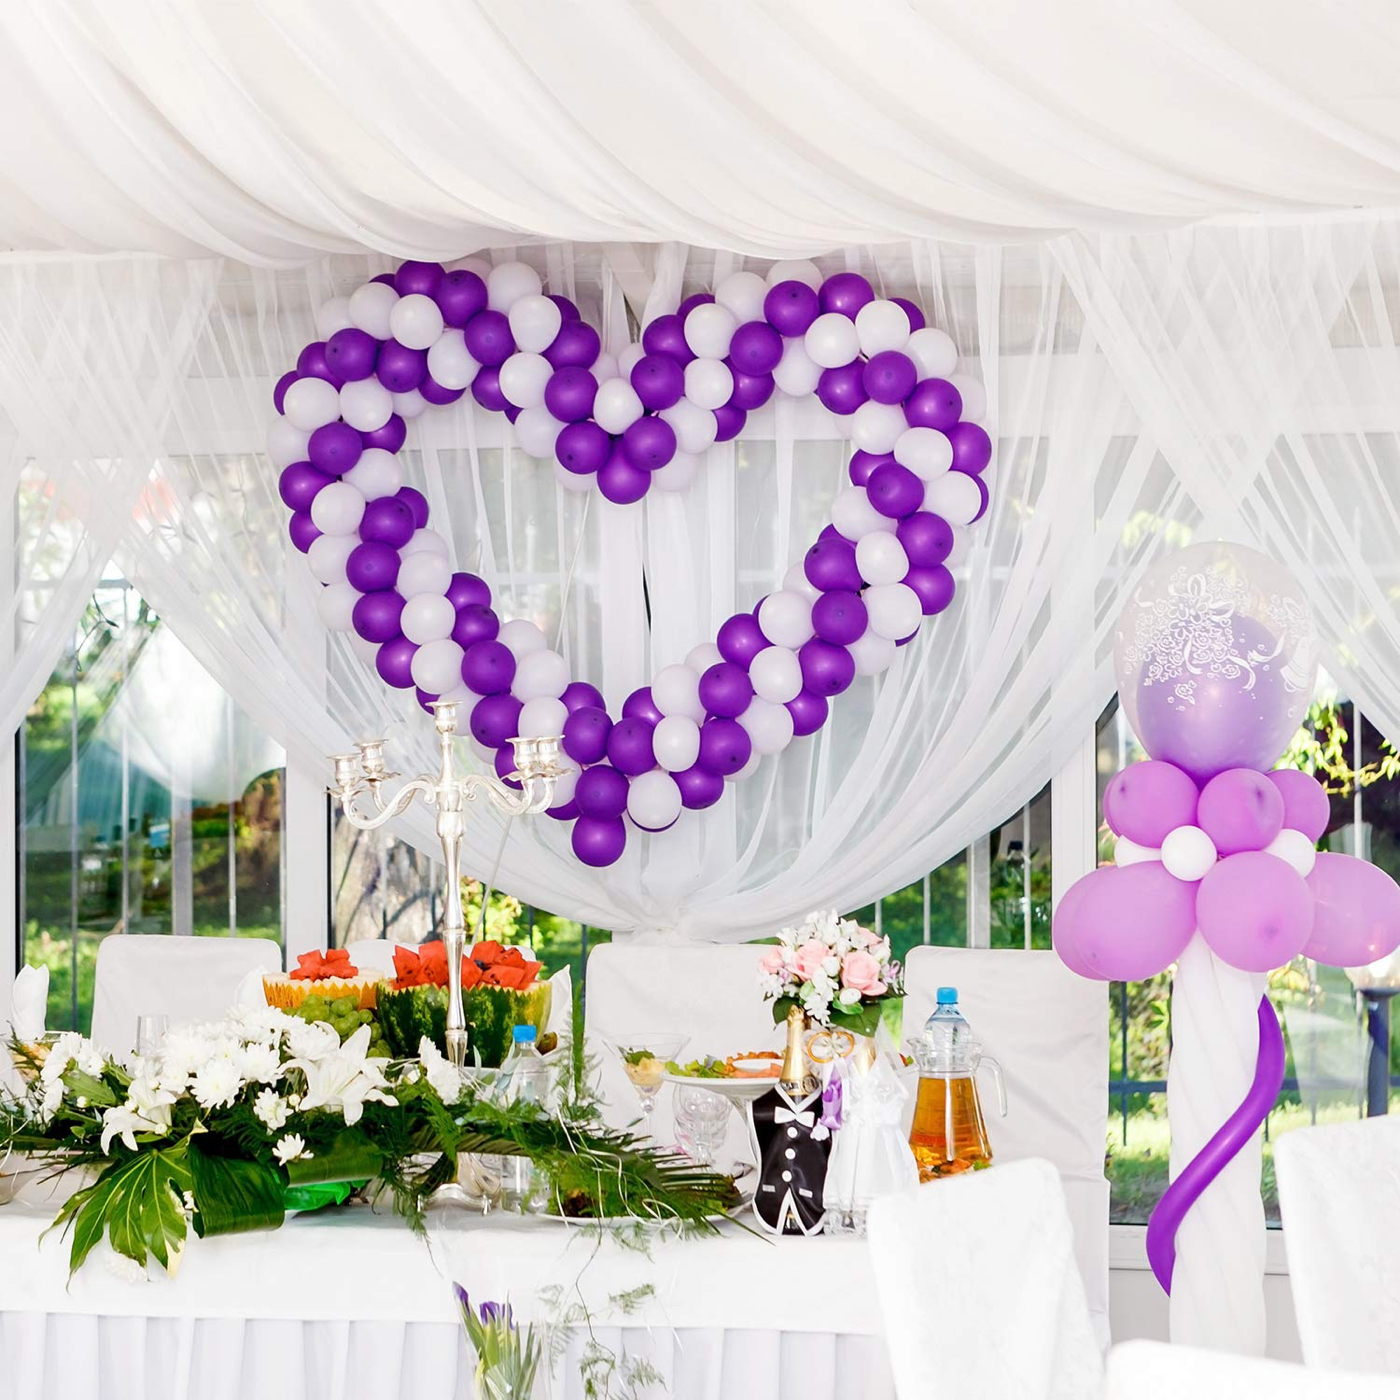 guirlande de ballons en forme de coeur déco mariage violet et blanc